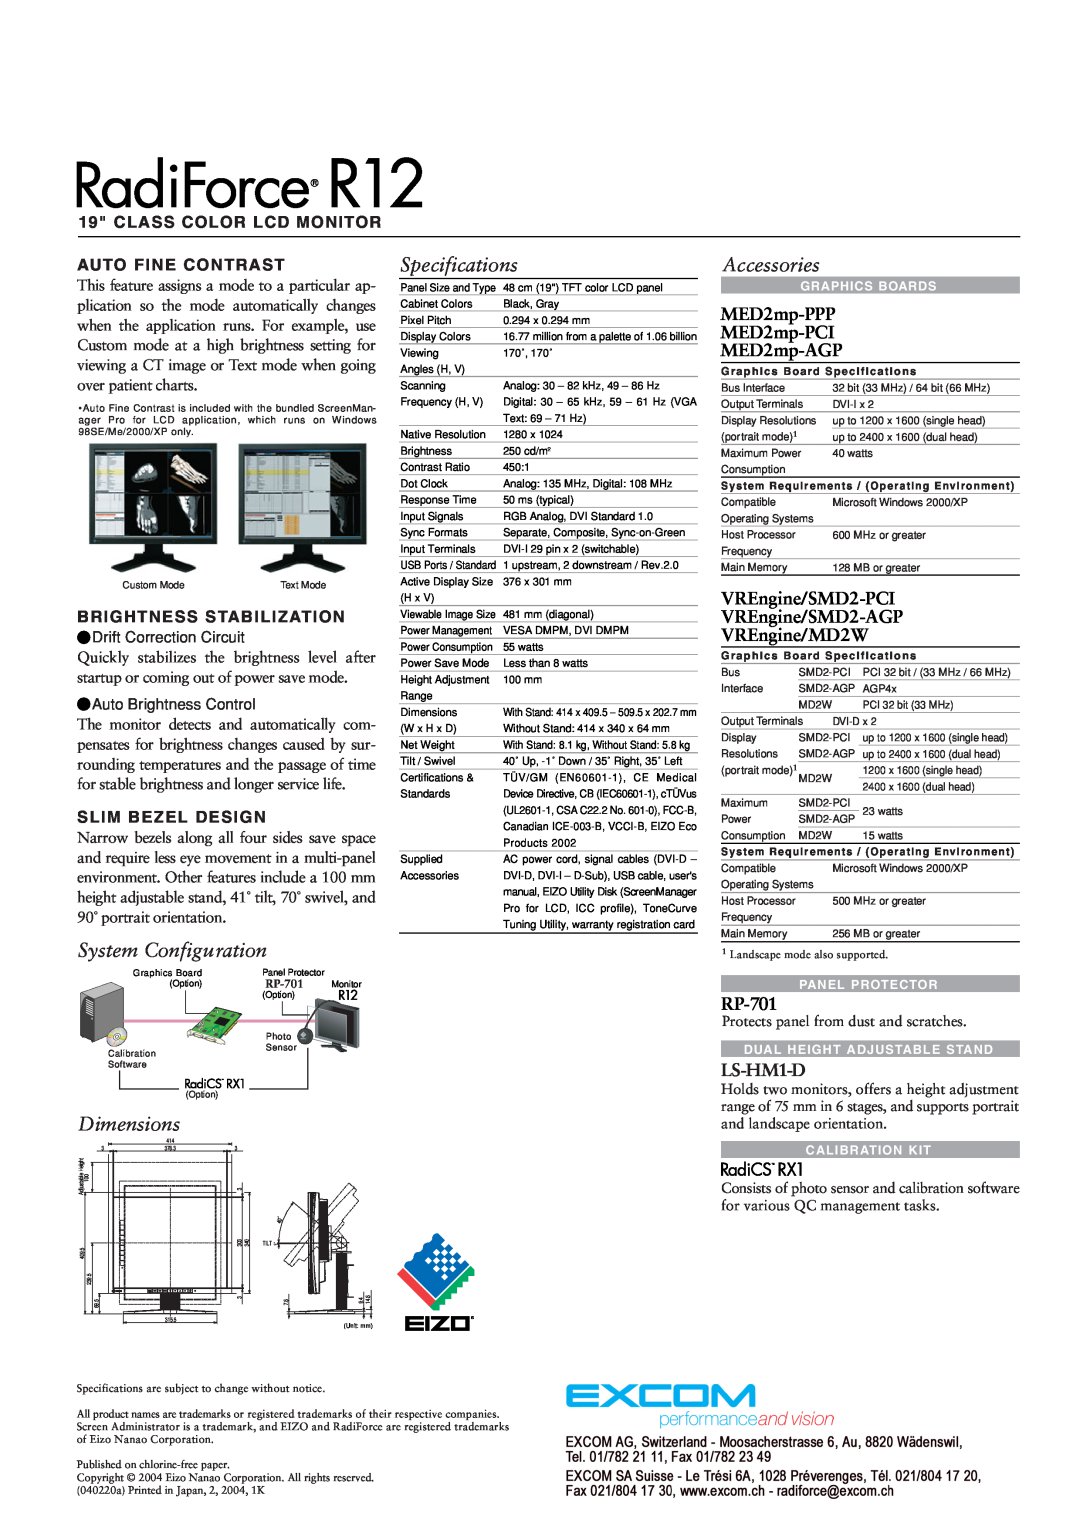 Eizo R12 Class Color Lcd Monitor, Auto Fine Contrast, Brightness Stabilization, Slim Bezel Design, Specifications, RP-701 